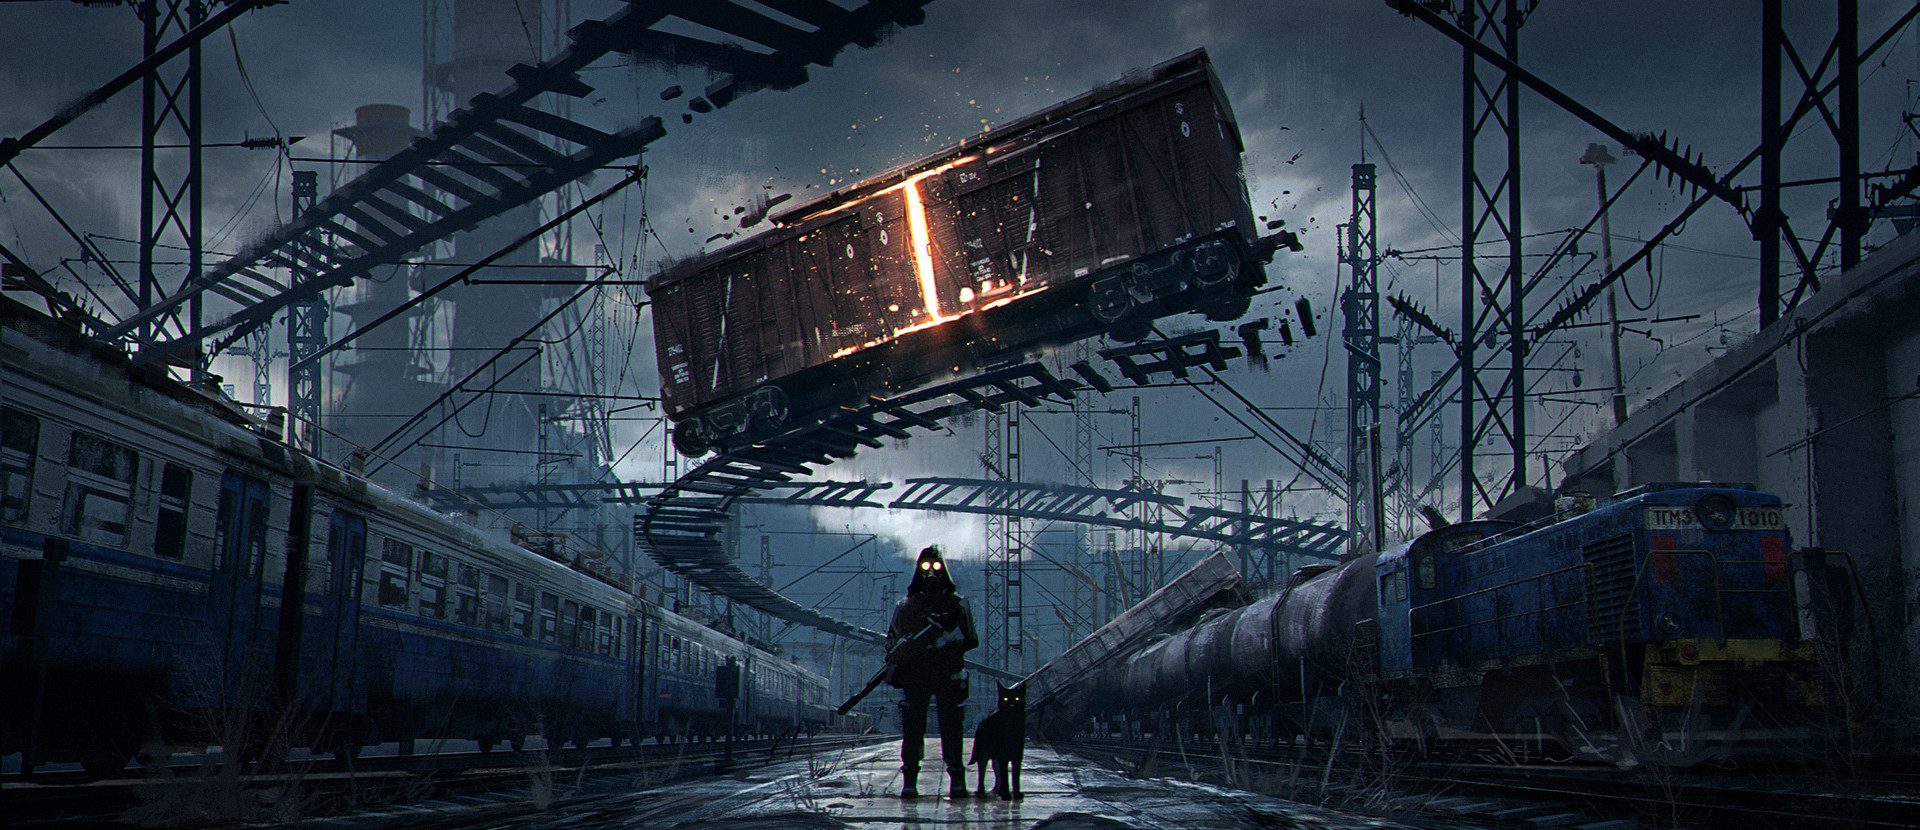 Concept Art Artwork Science Fiction Apocalyptic Digital Art Surreal Environment Gas Masks Dark Train 1920x830